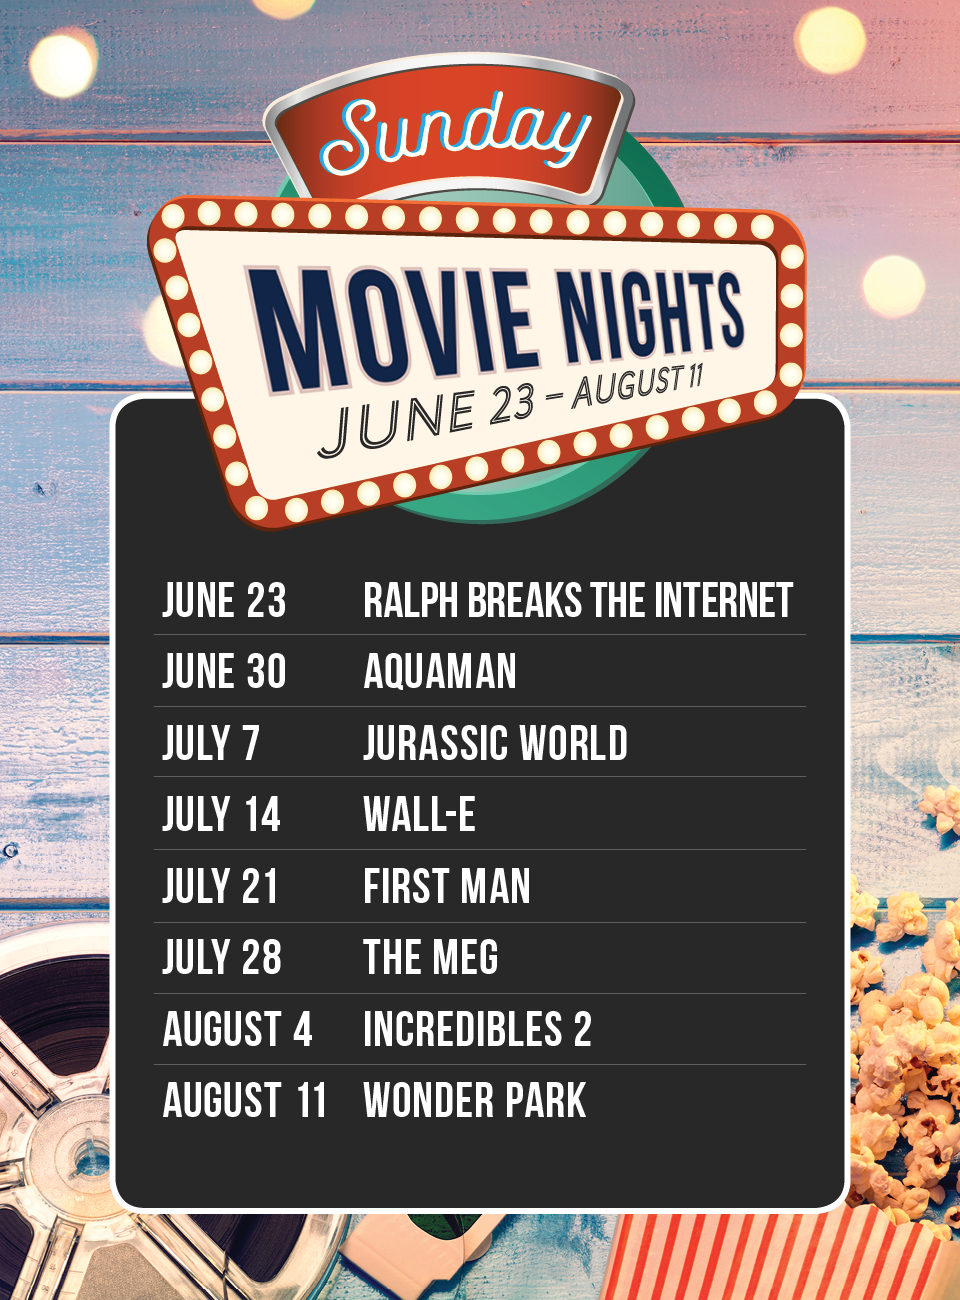 Sunday Movie Nights, June 23 to August 11.